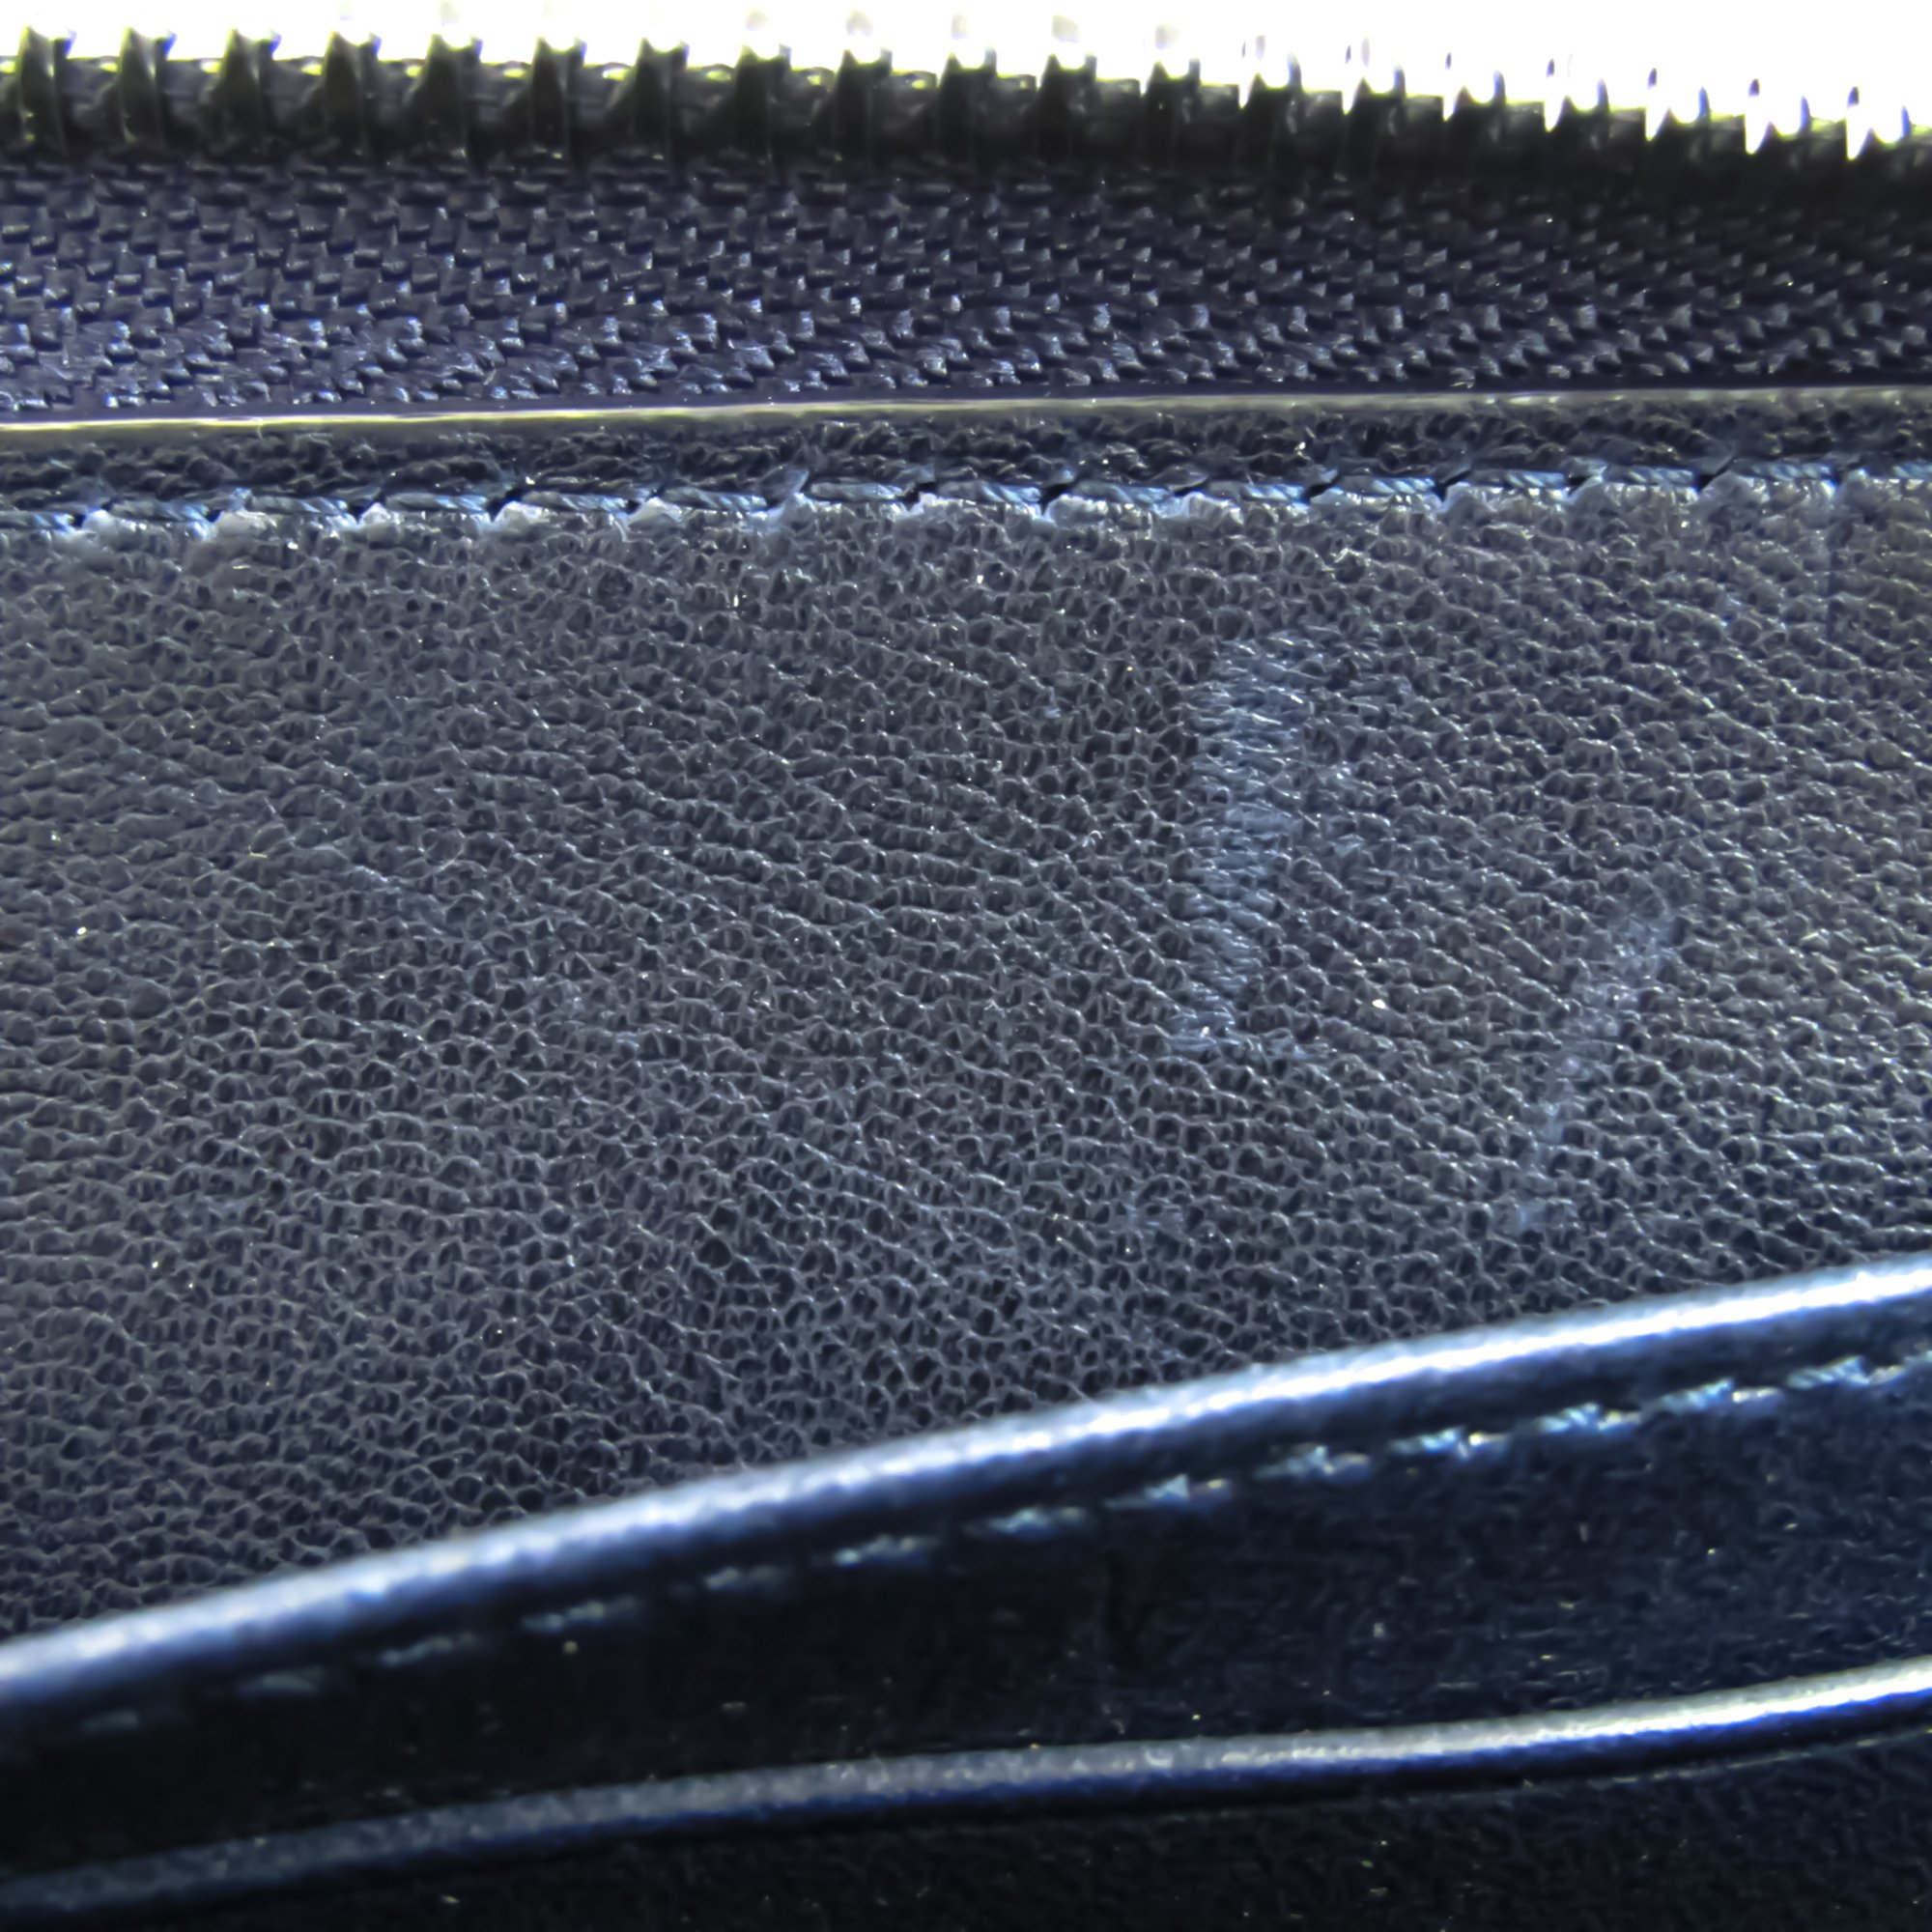 Jimmy Choo CARNABY BLS J000049385001 Unisex Leather Studded Long Wallet (bi-fold) Navy